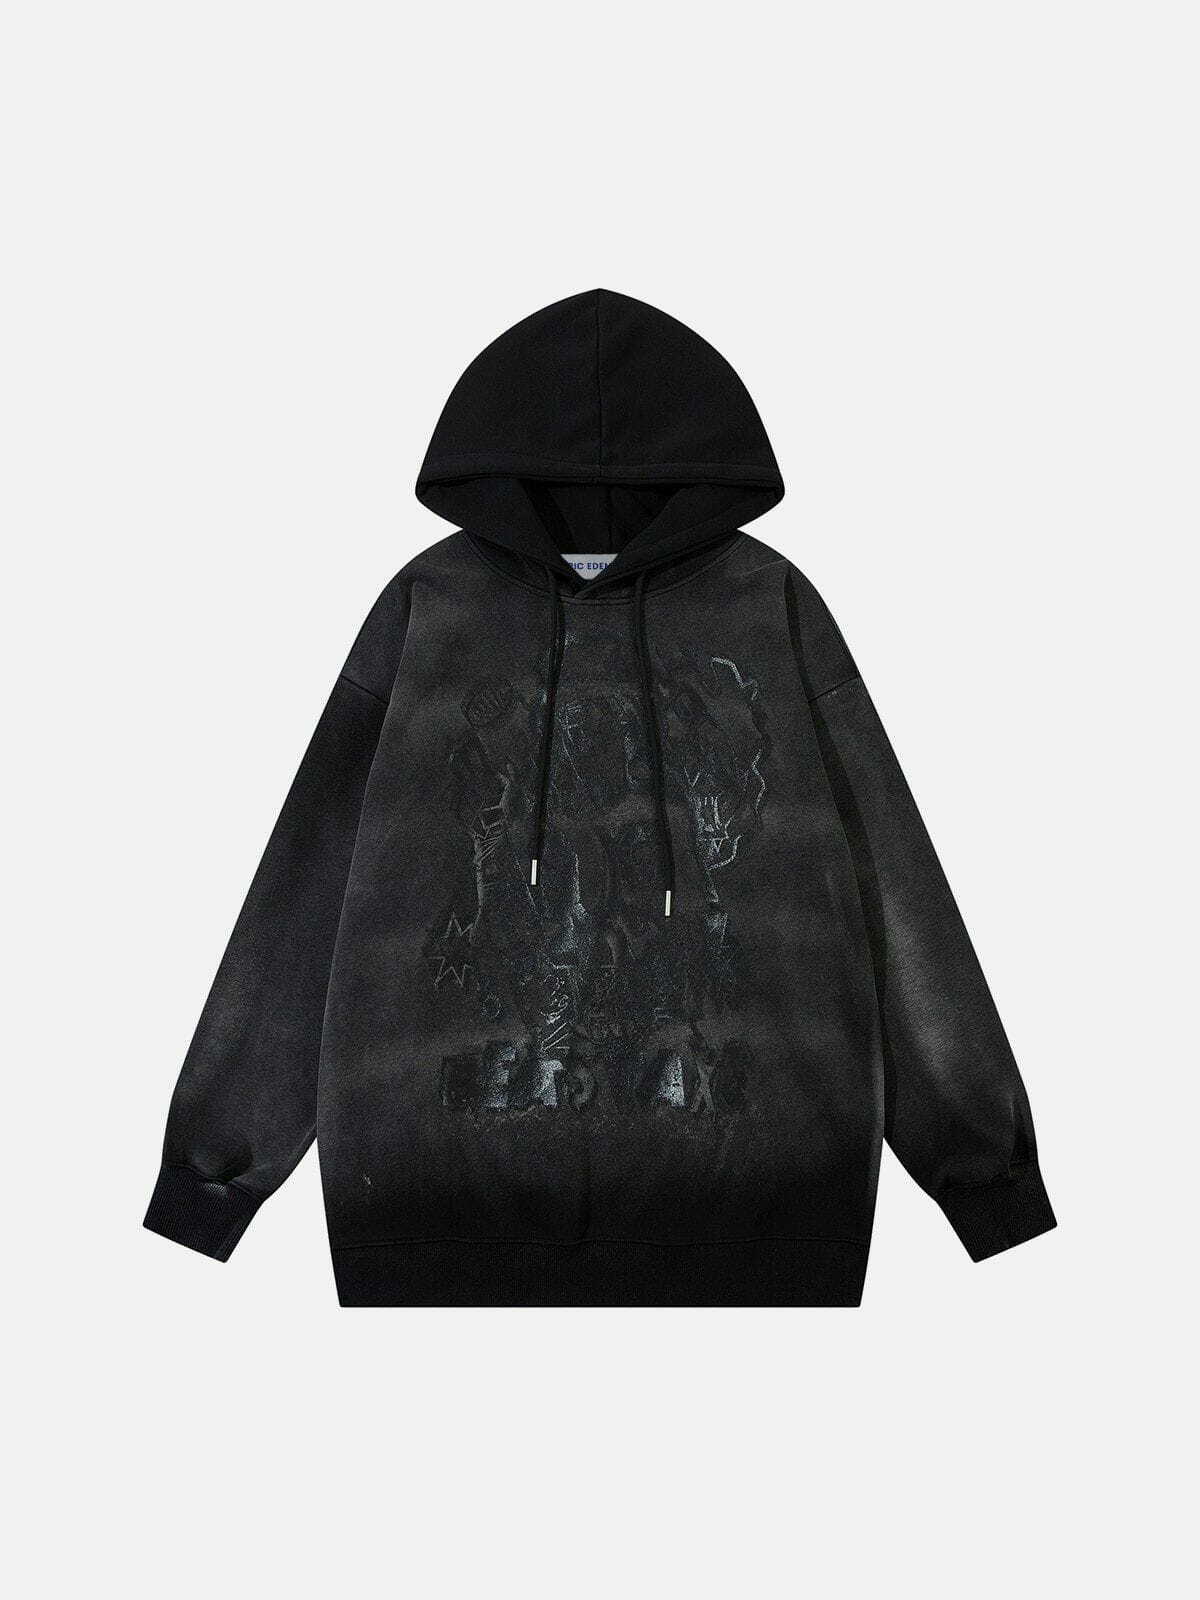 graffiti print washed hoodie edgy streetwear essential 7637